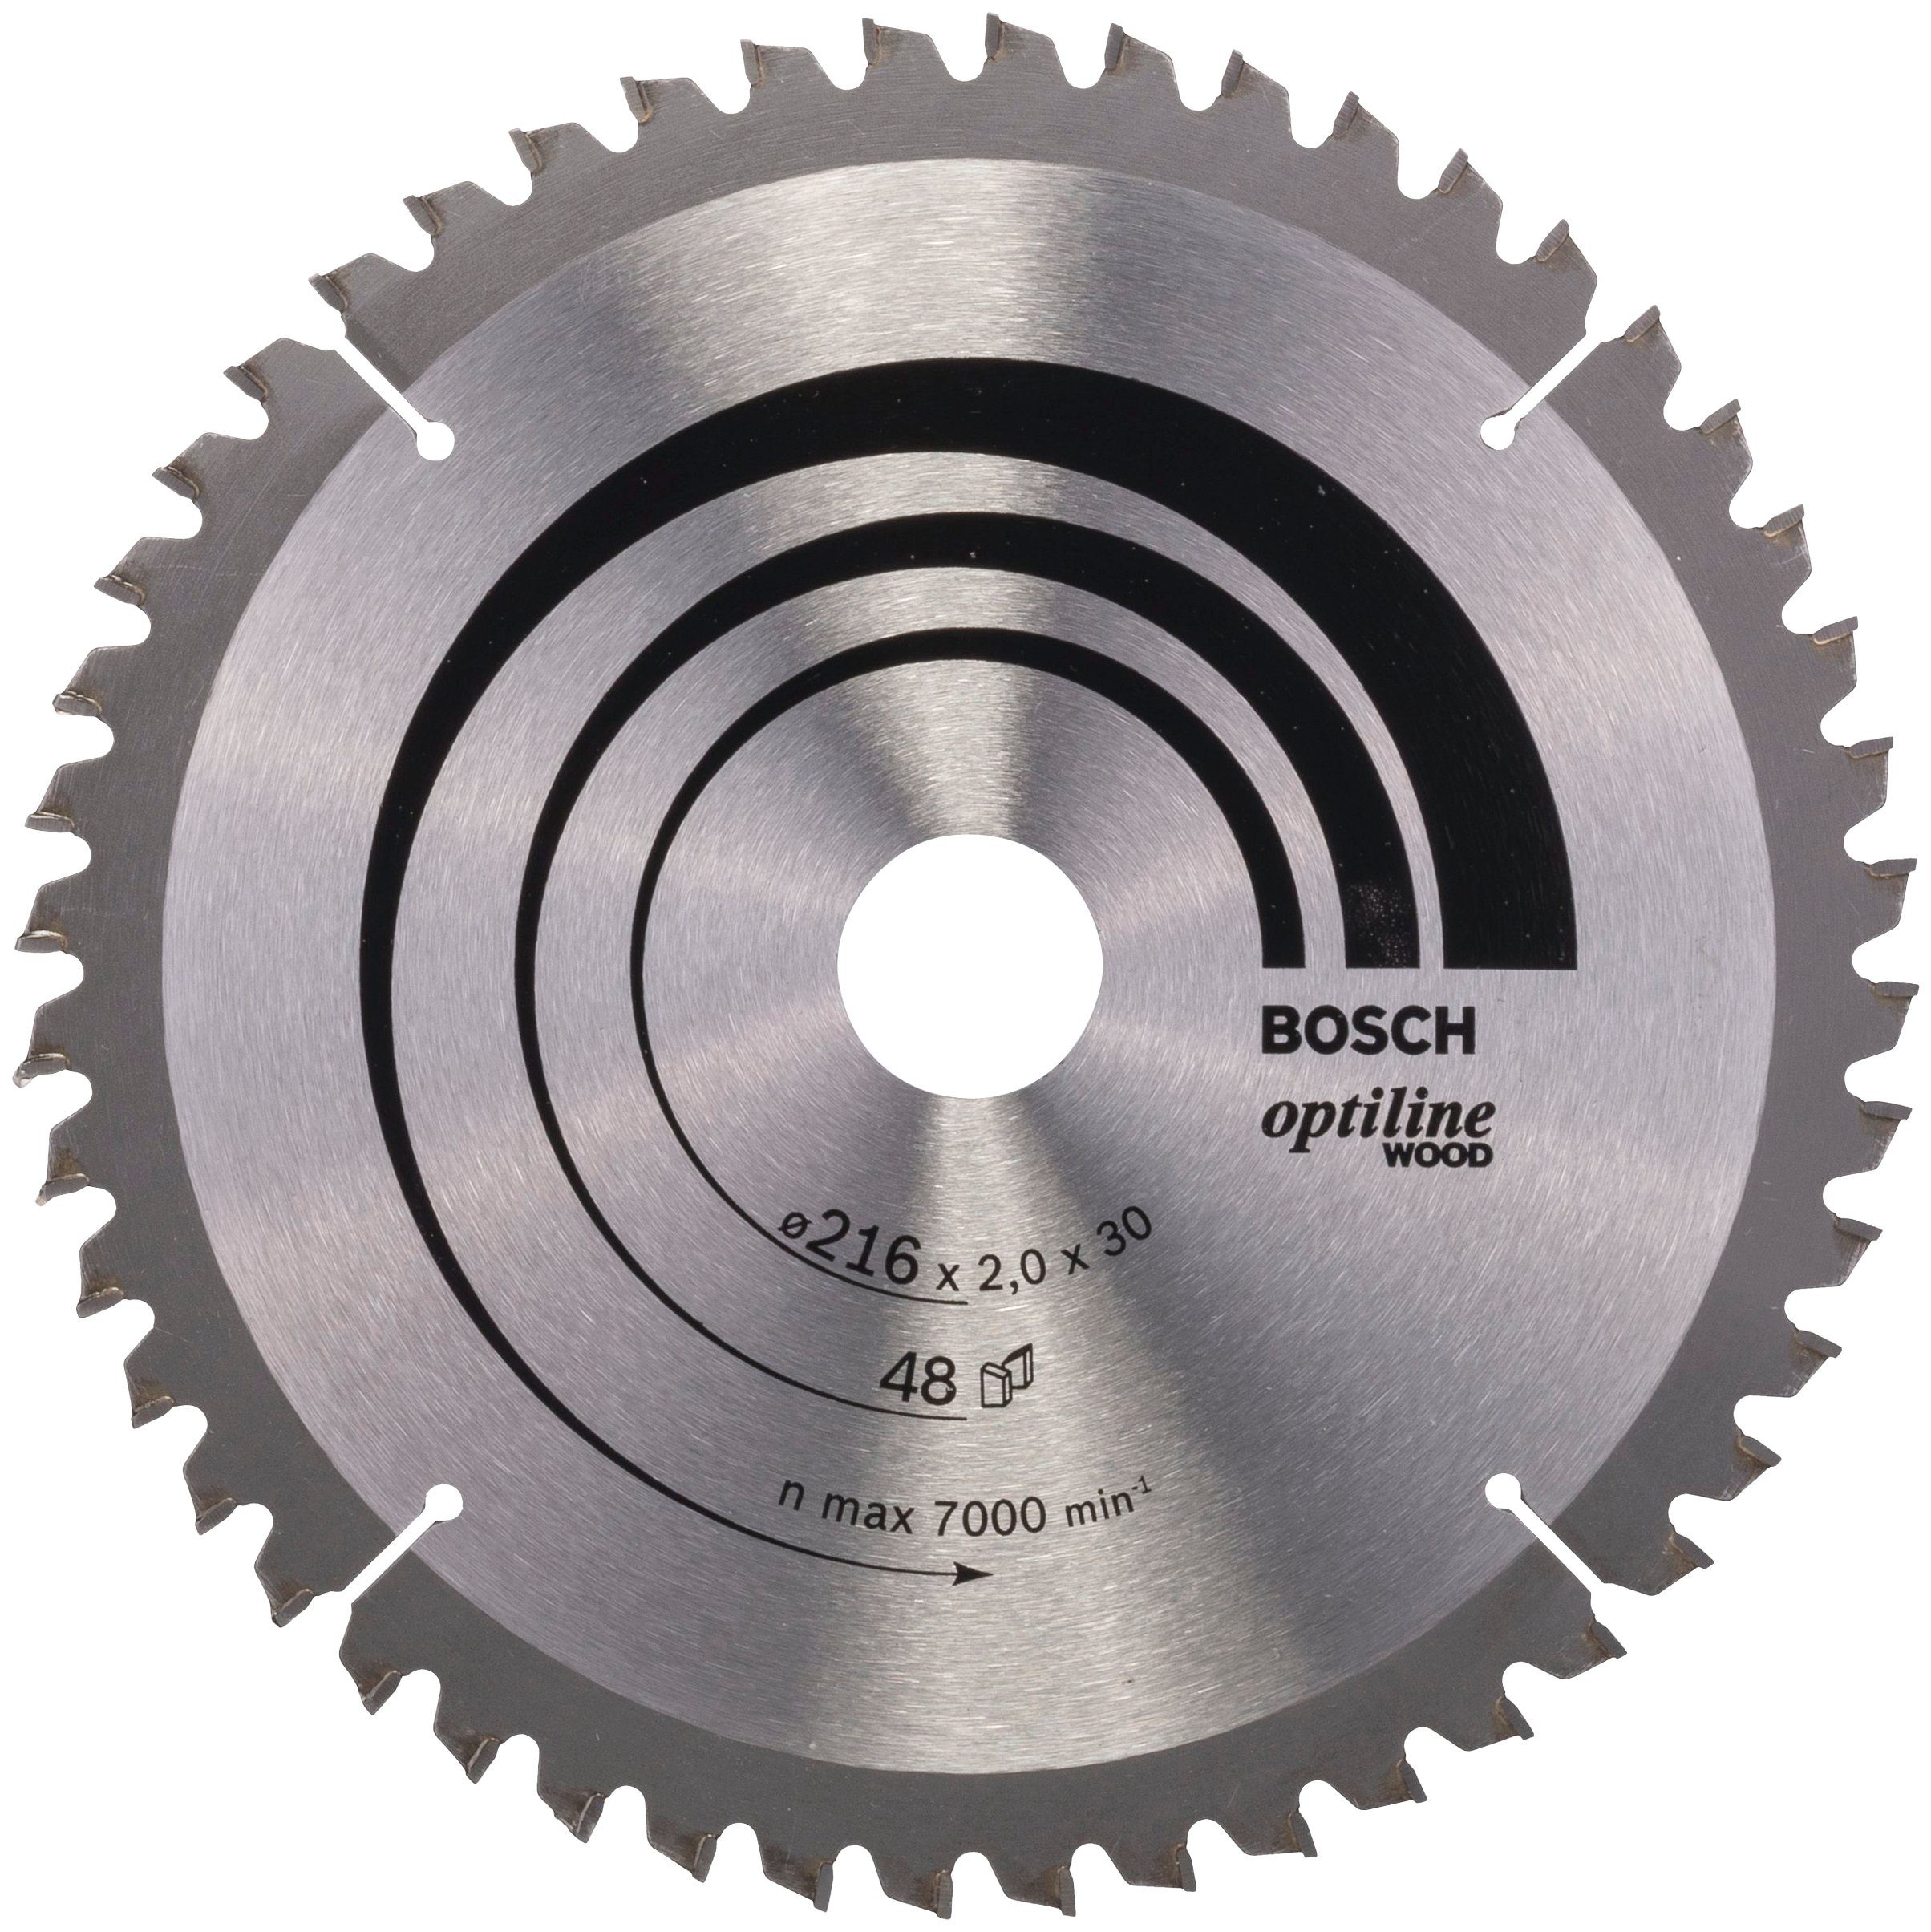 Bosch Professional Kreissägeblatt Optiline Wood, mm, 2,0 Mittel x Schnittgüte: 30 48, 216 - x grob